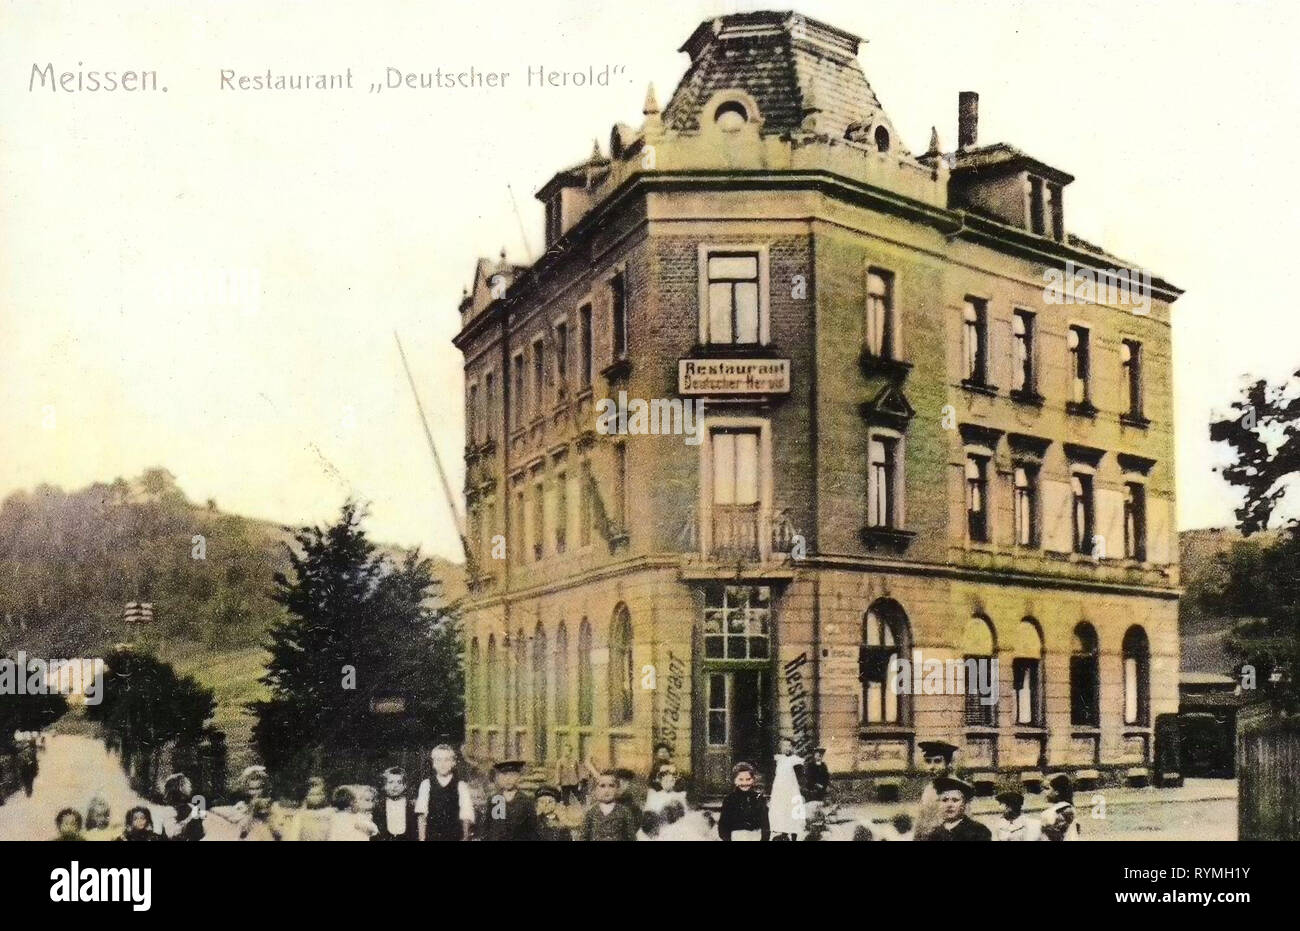 Restaurants in Landkreis Meißen, Buildings in Meißen, 1908, Meißen, Restaurant Deutscher Herold, Germany Stock Photo